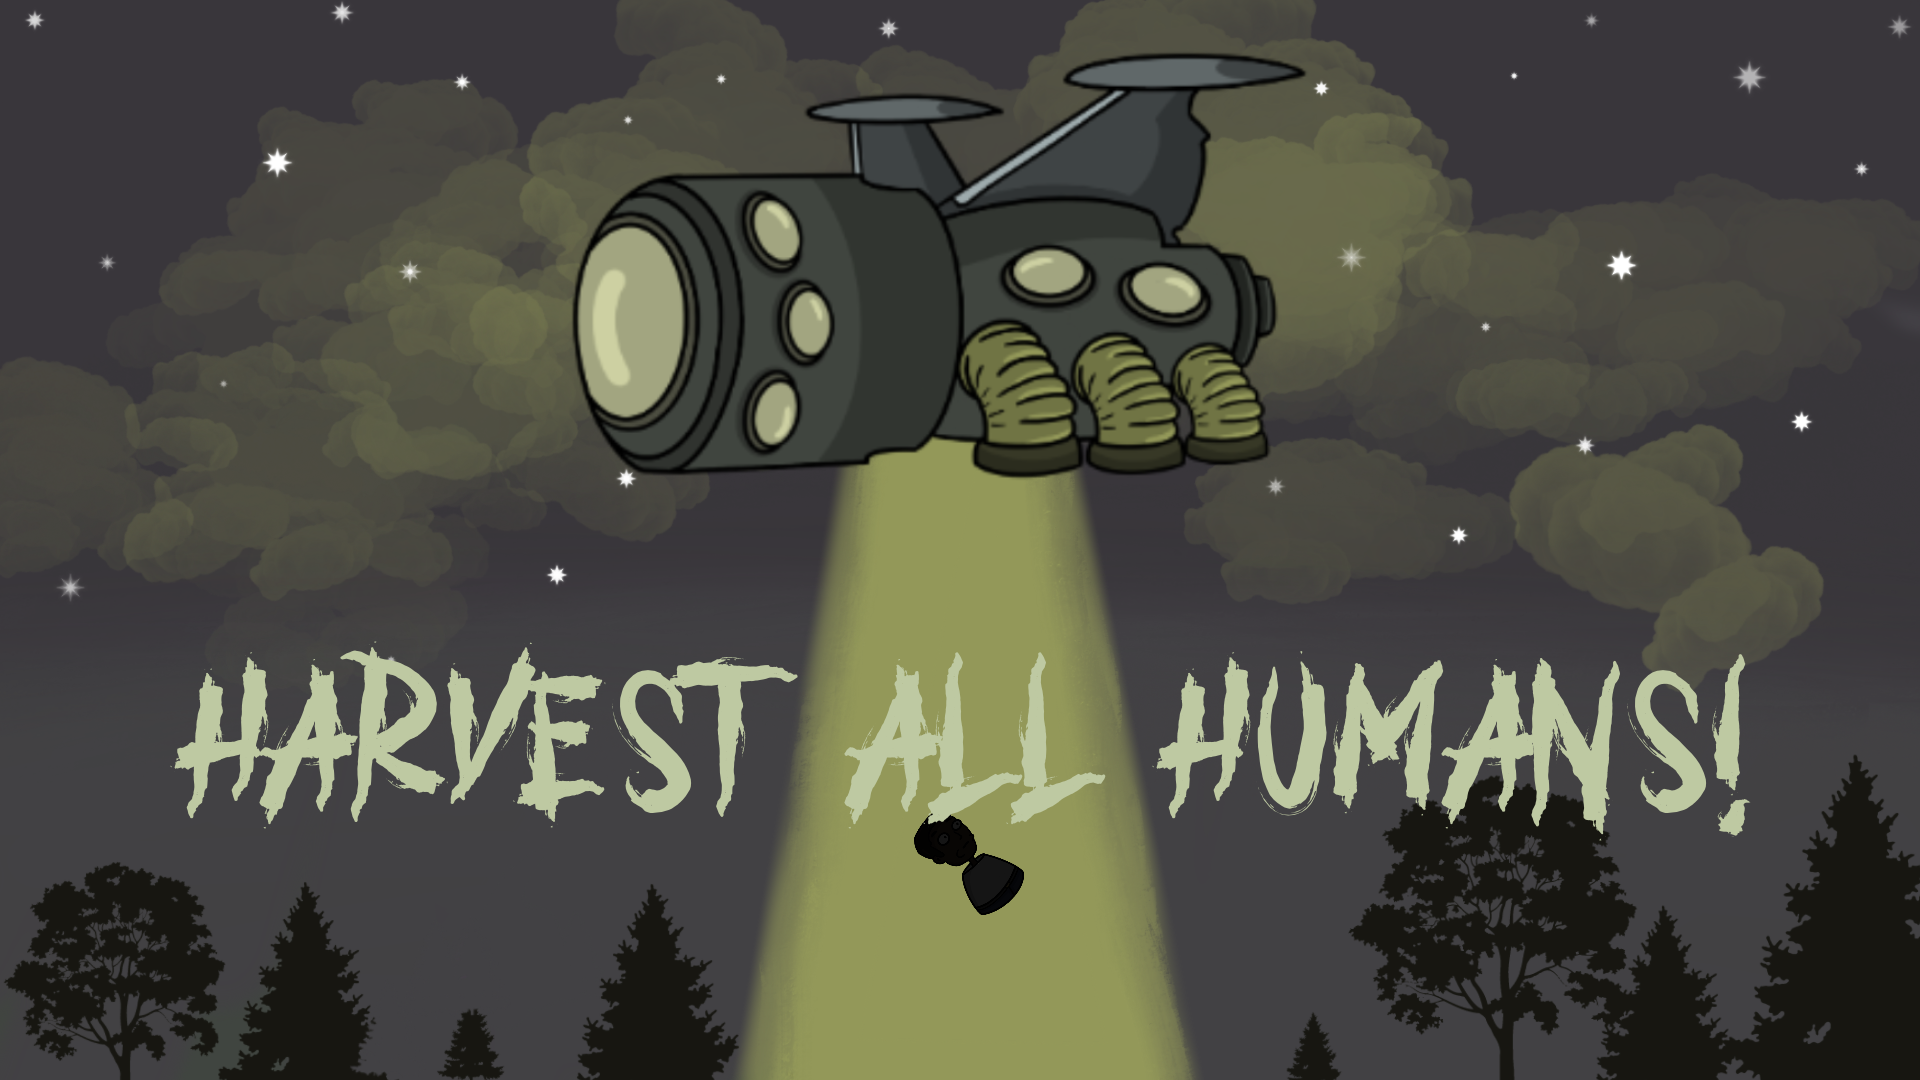 Harvest all humans!